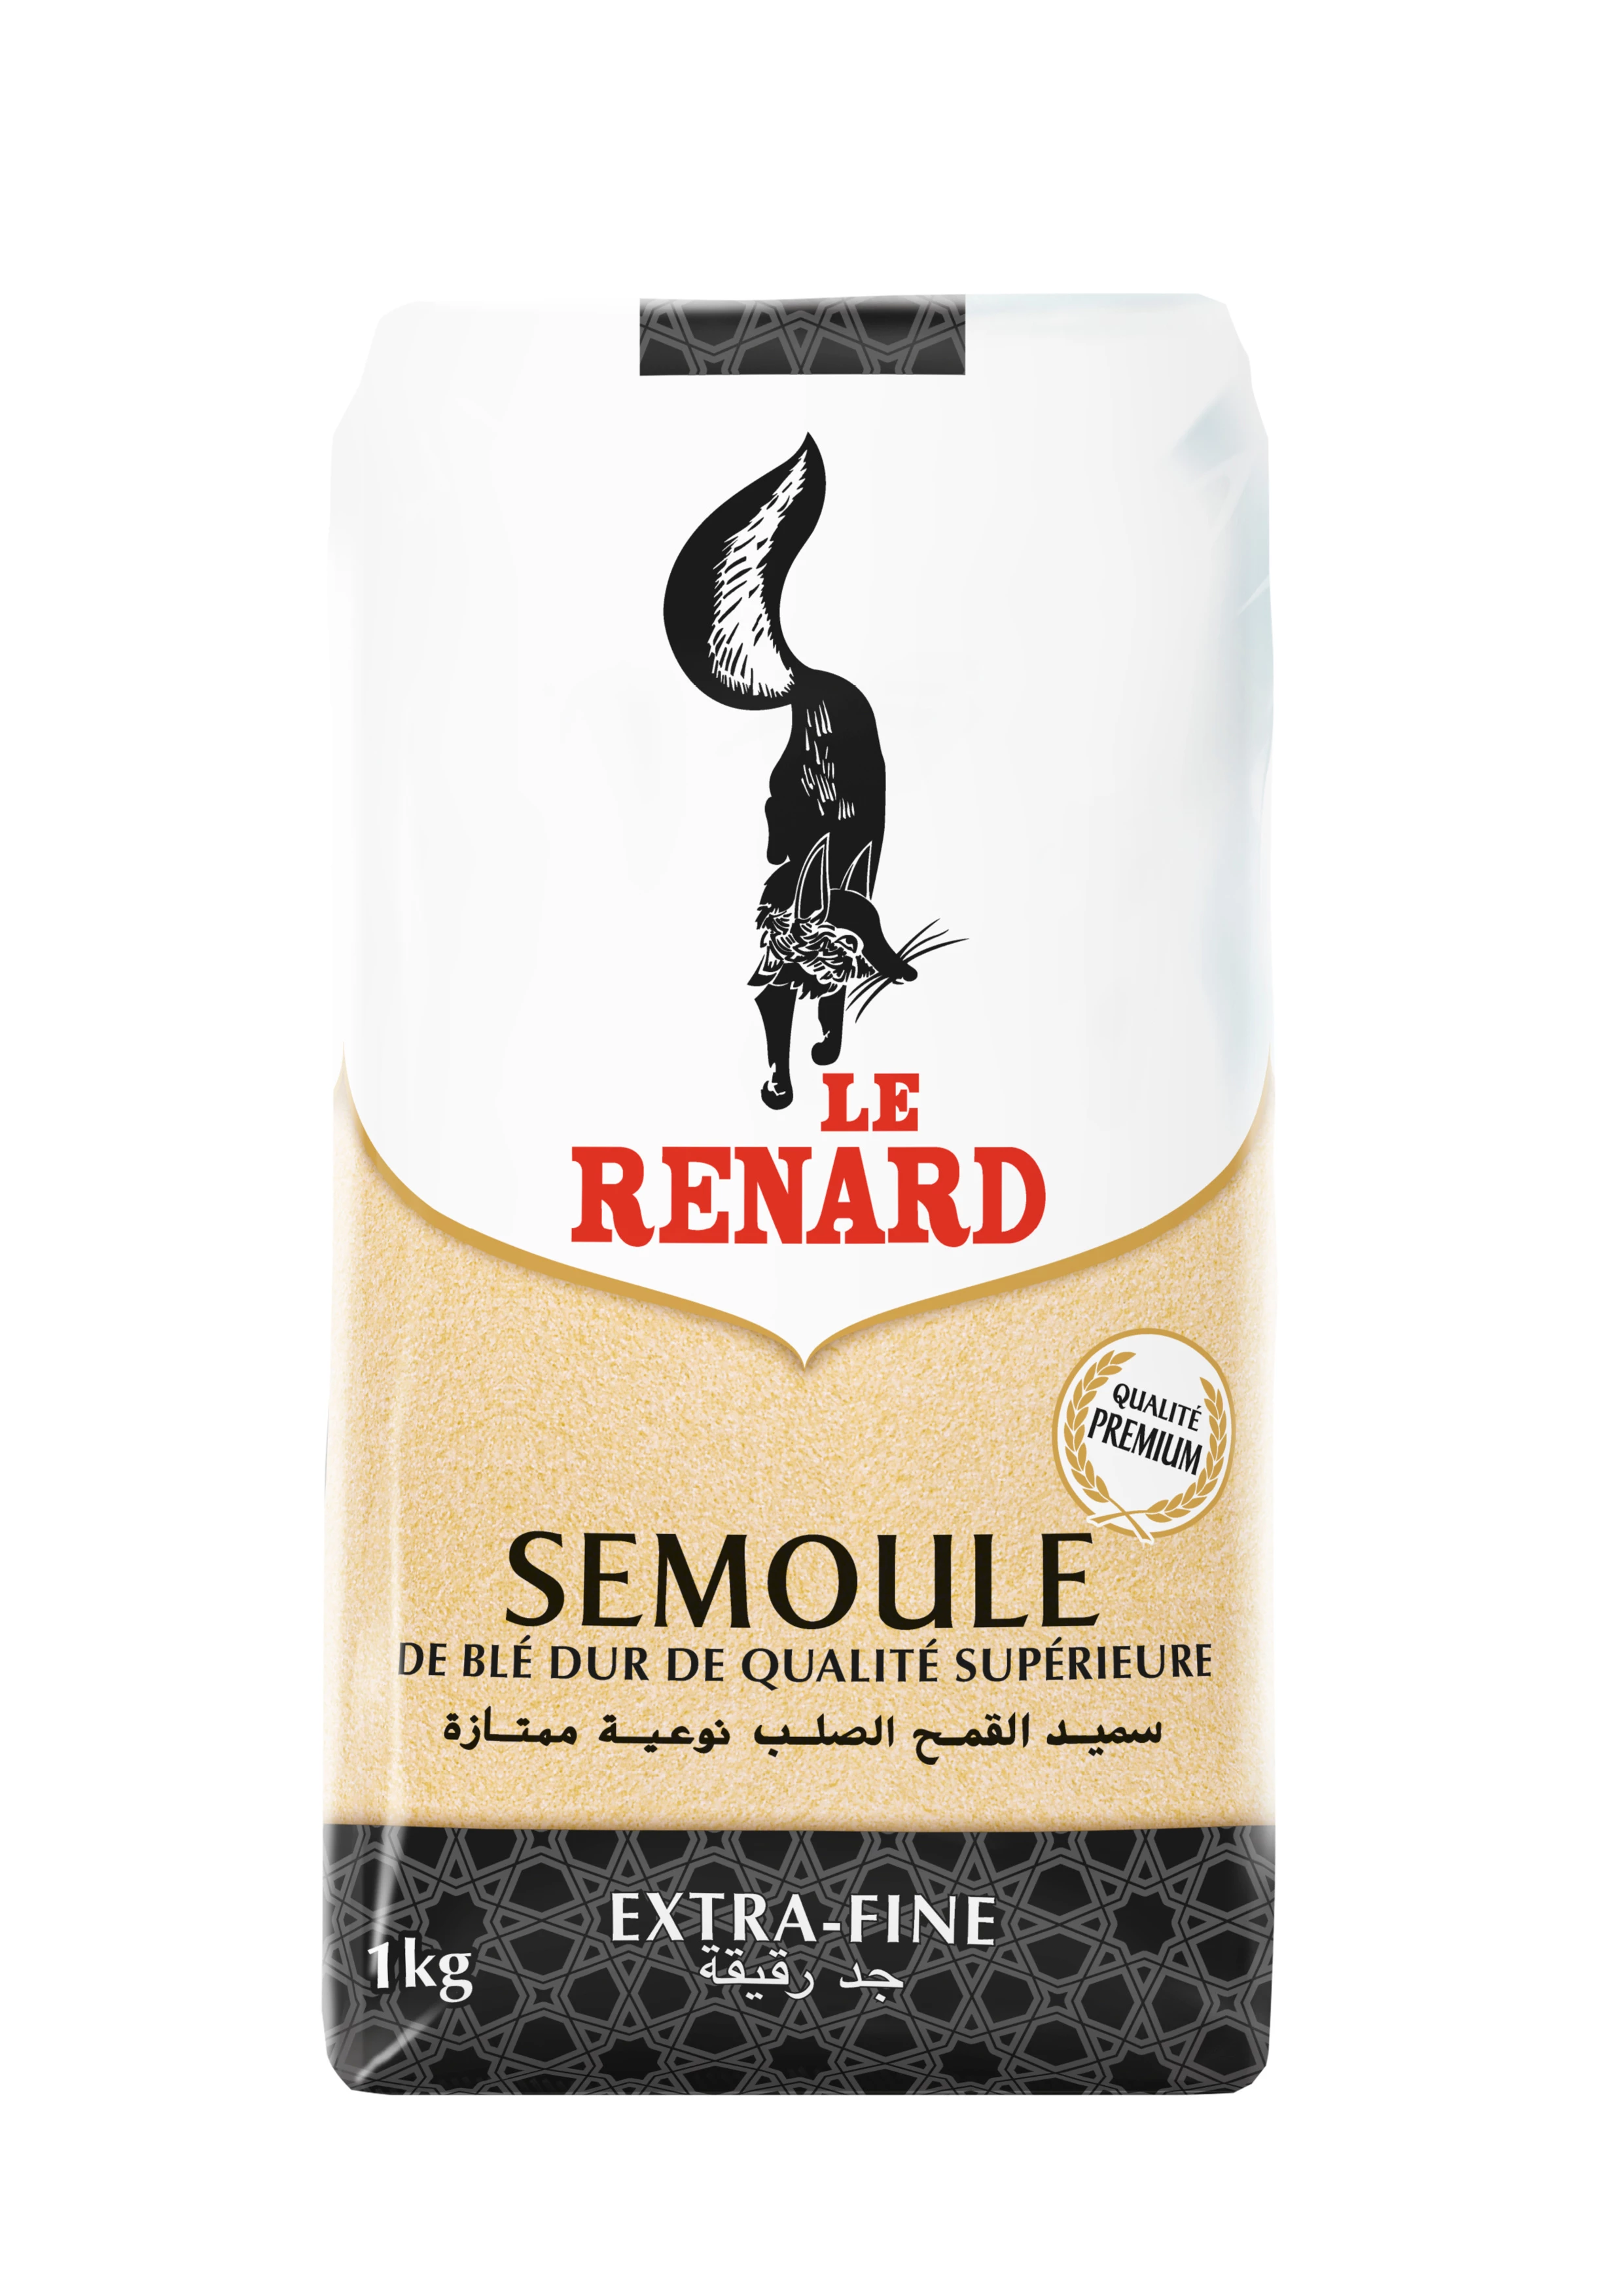 Extra-fine wheat semolina - LE RENARD